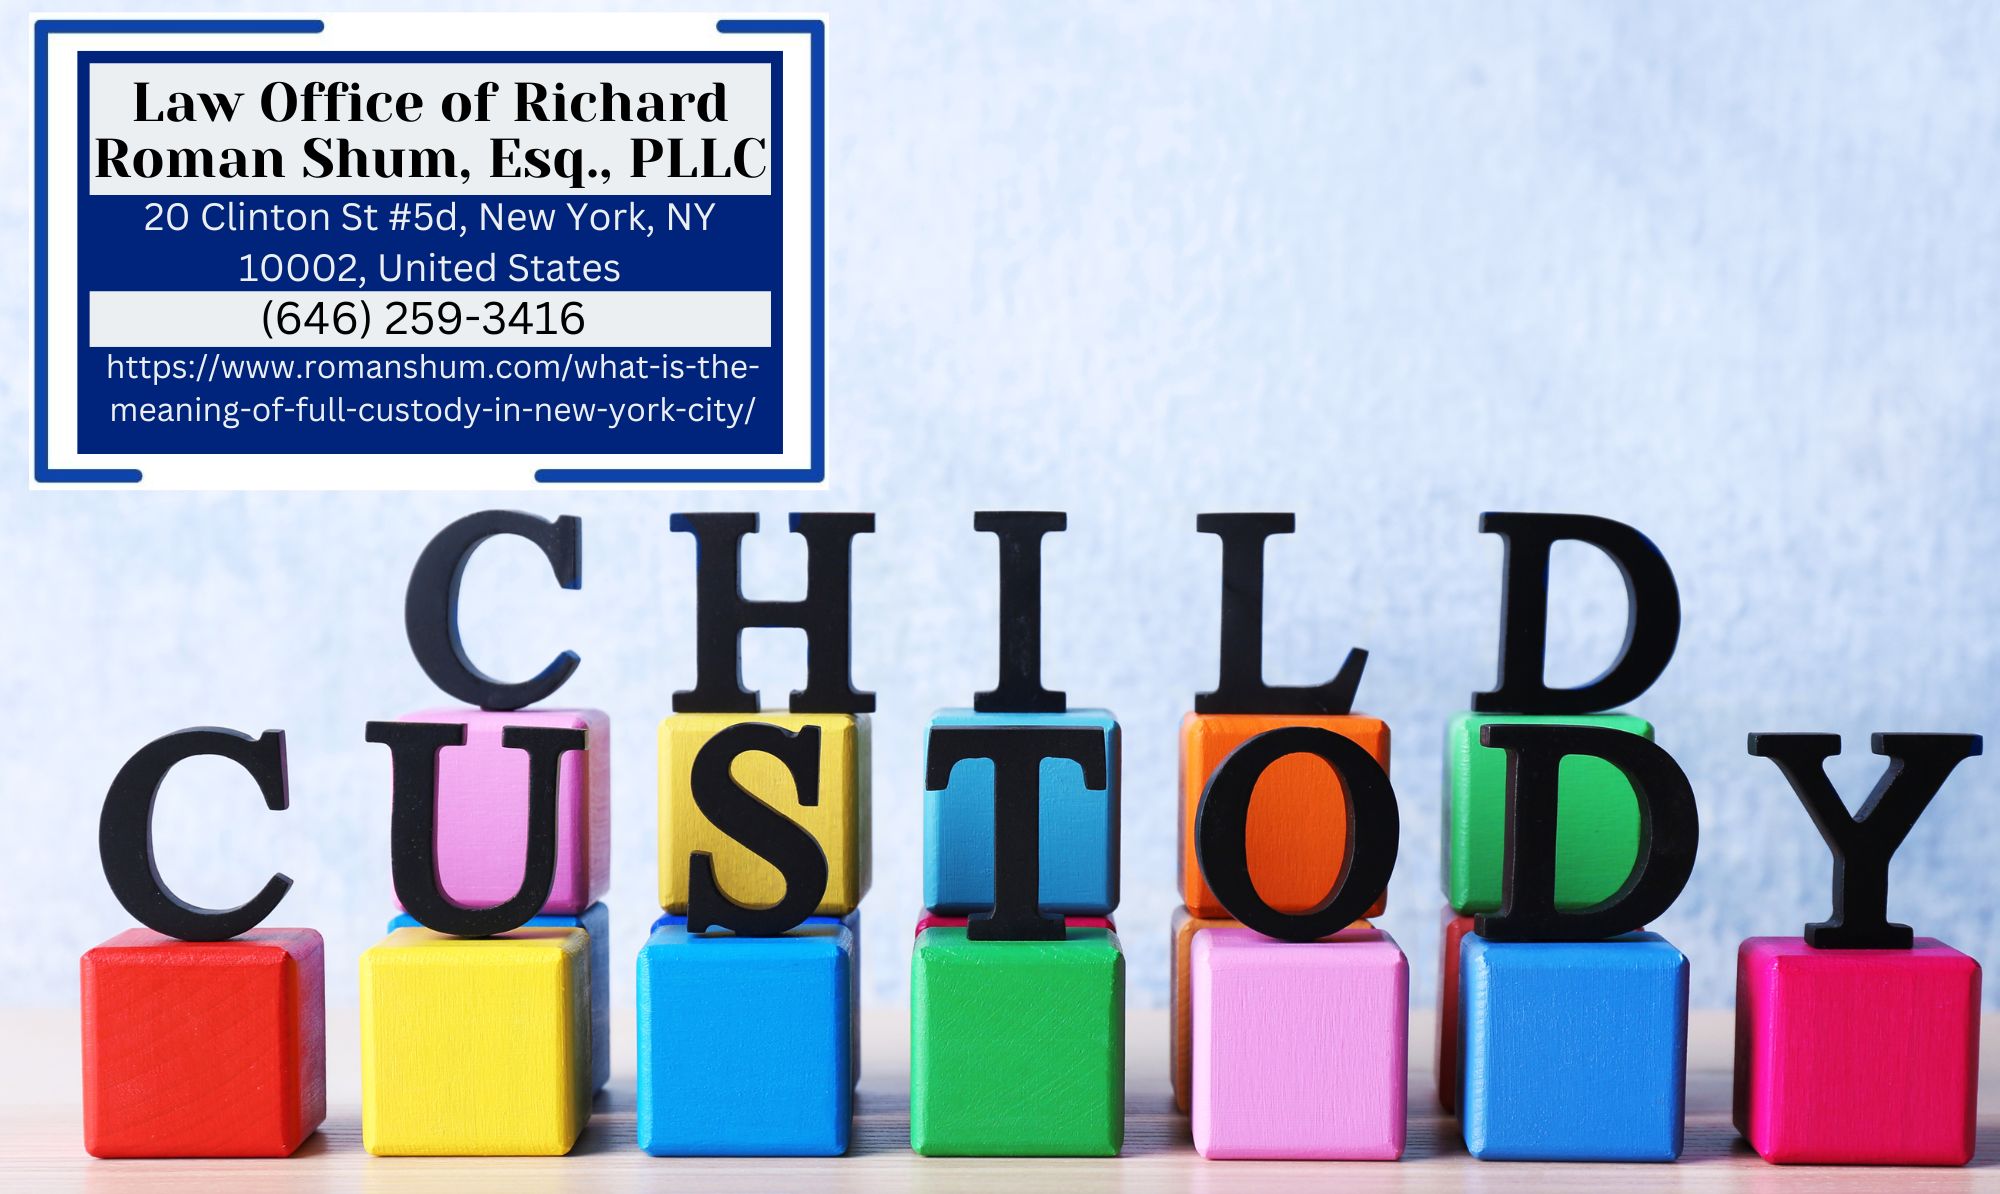 New York Family Law Attorney Richard Roman Shum Elucidates upon the Intricacies of Full Custody in Recent Article